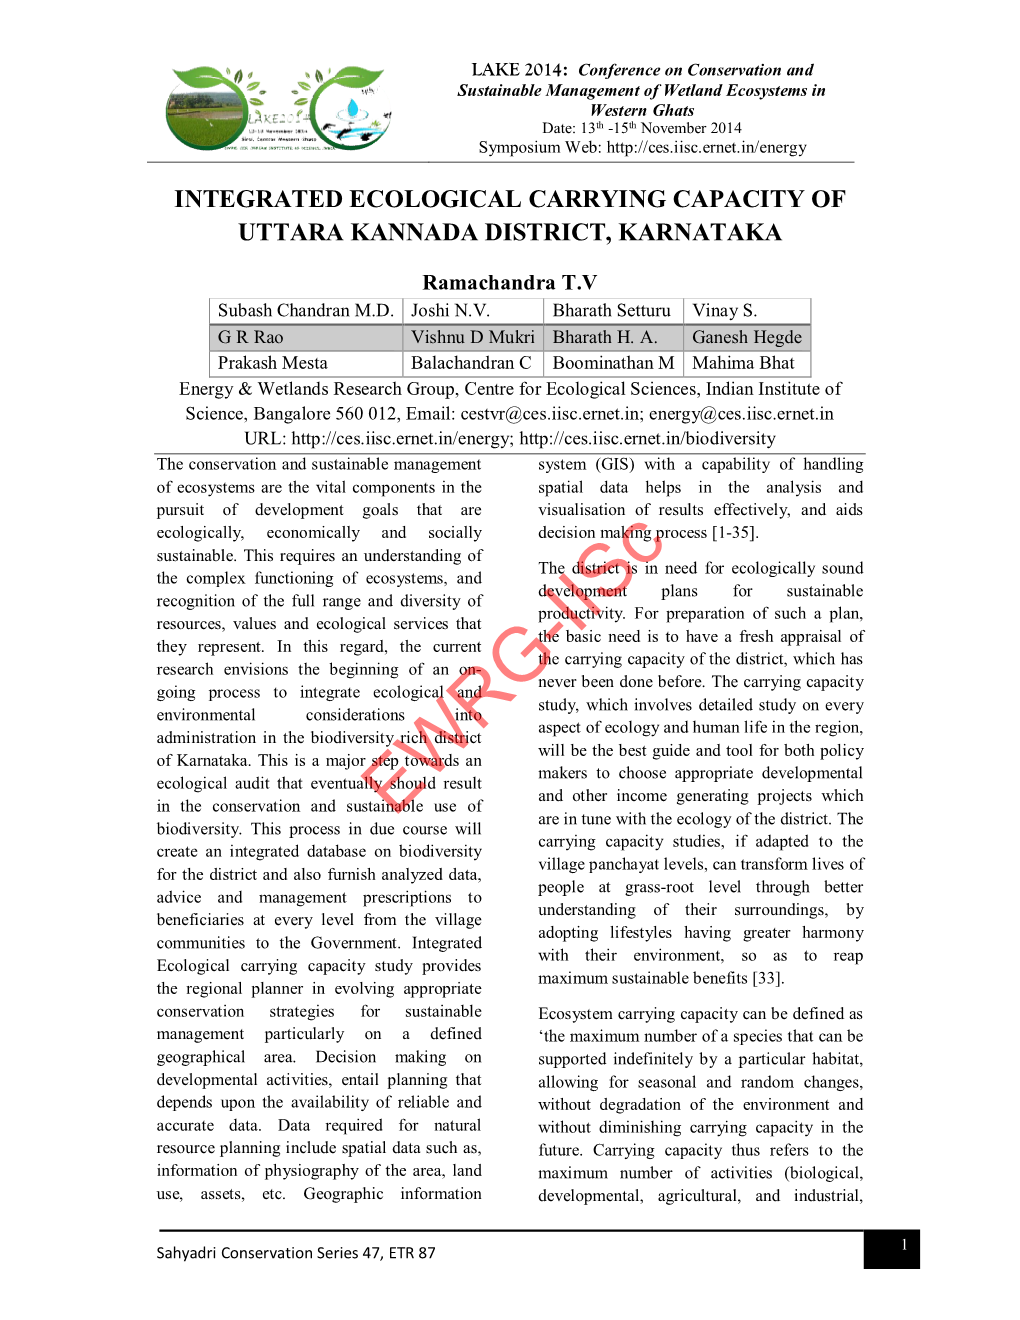 Integrated Ecological Carrying Capacity of Uttara Kannada District, Karnataka